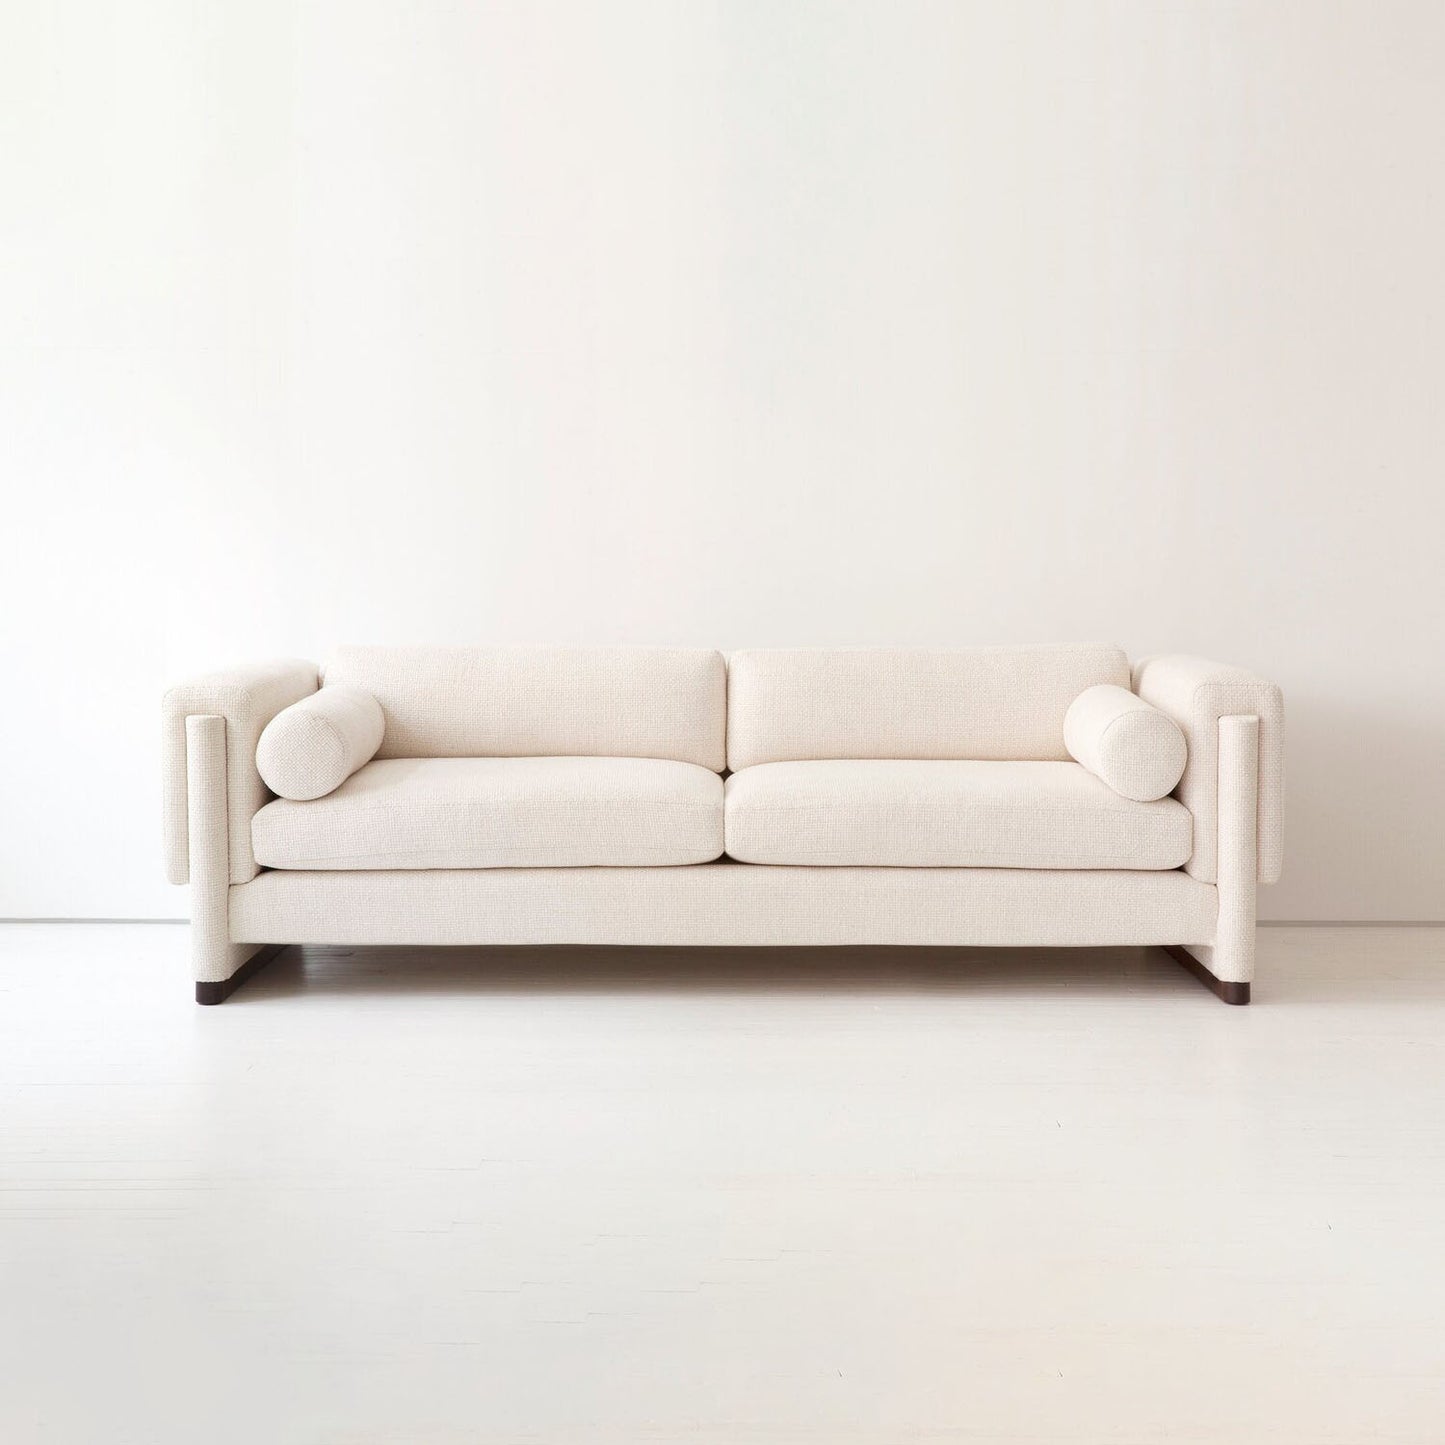 Beech wood sofa 85×210 cm-SBF75